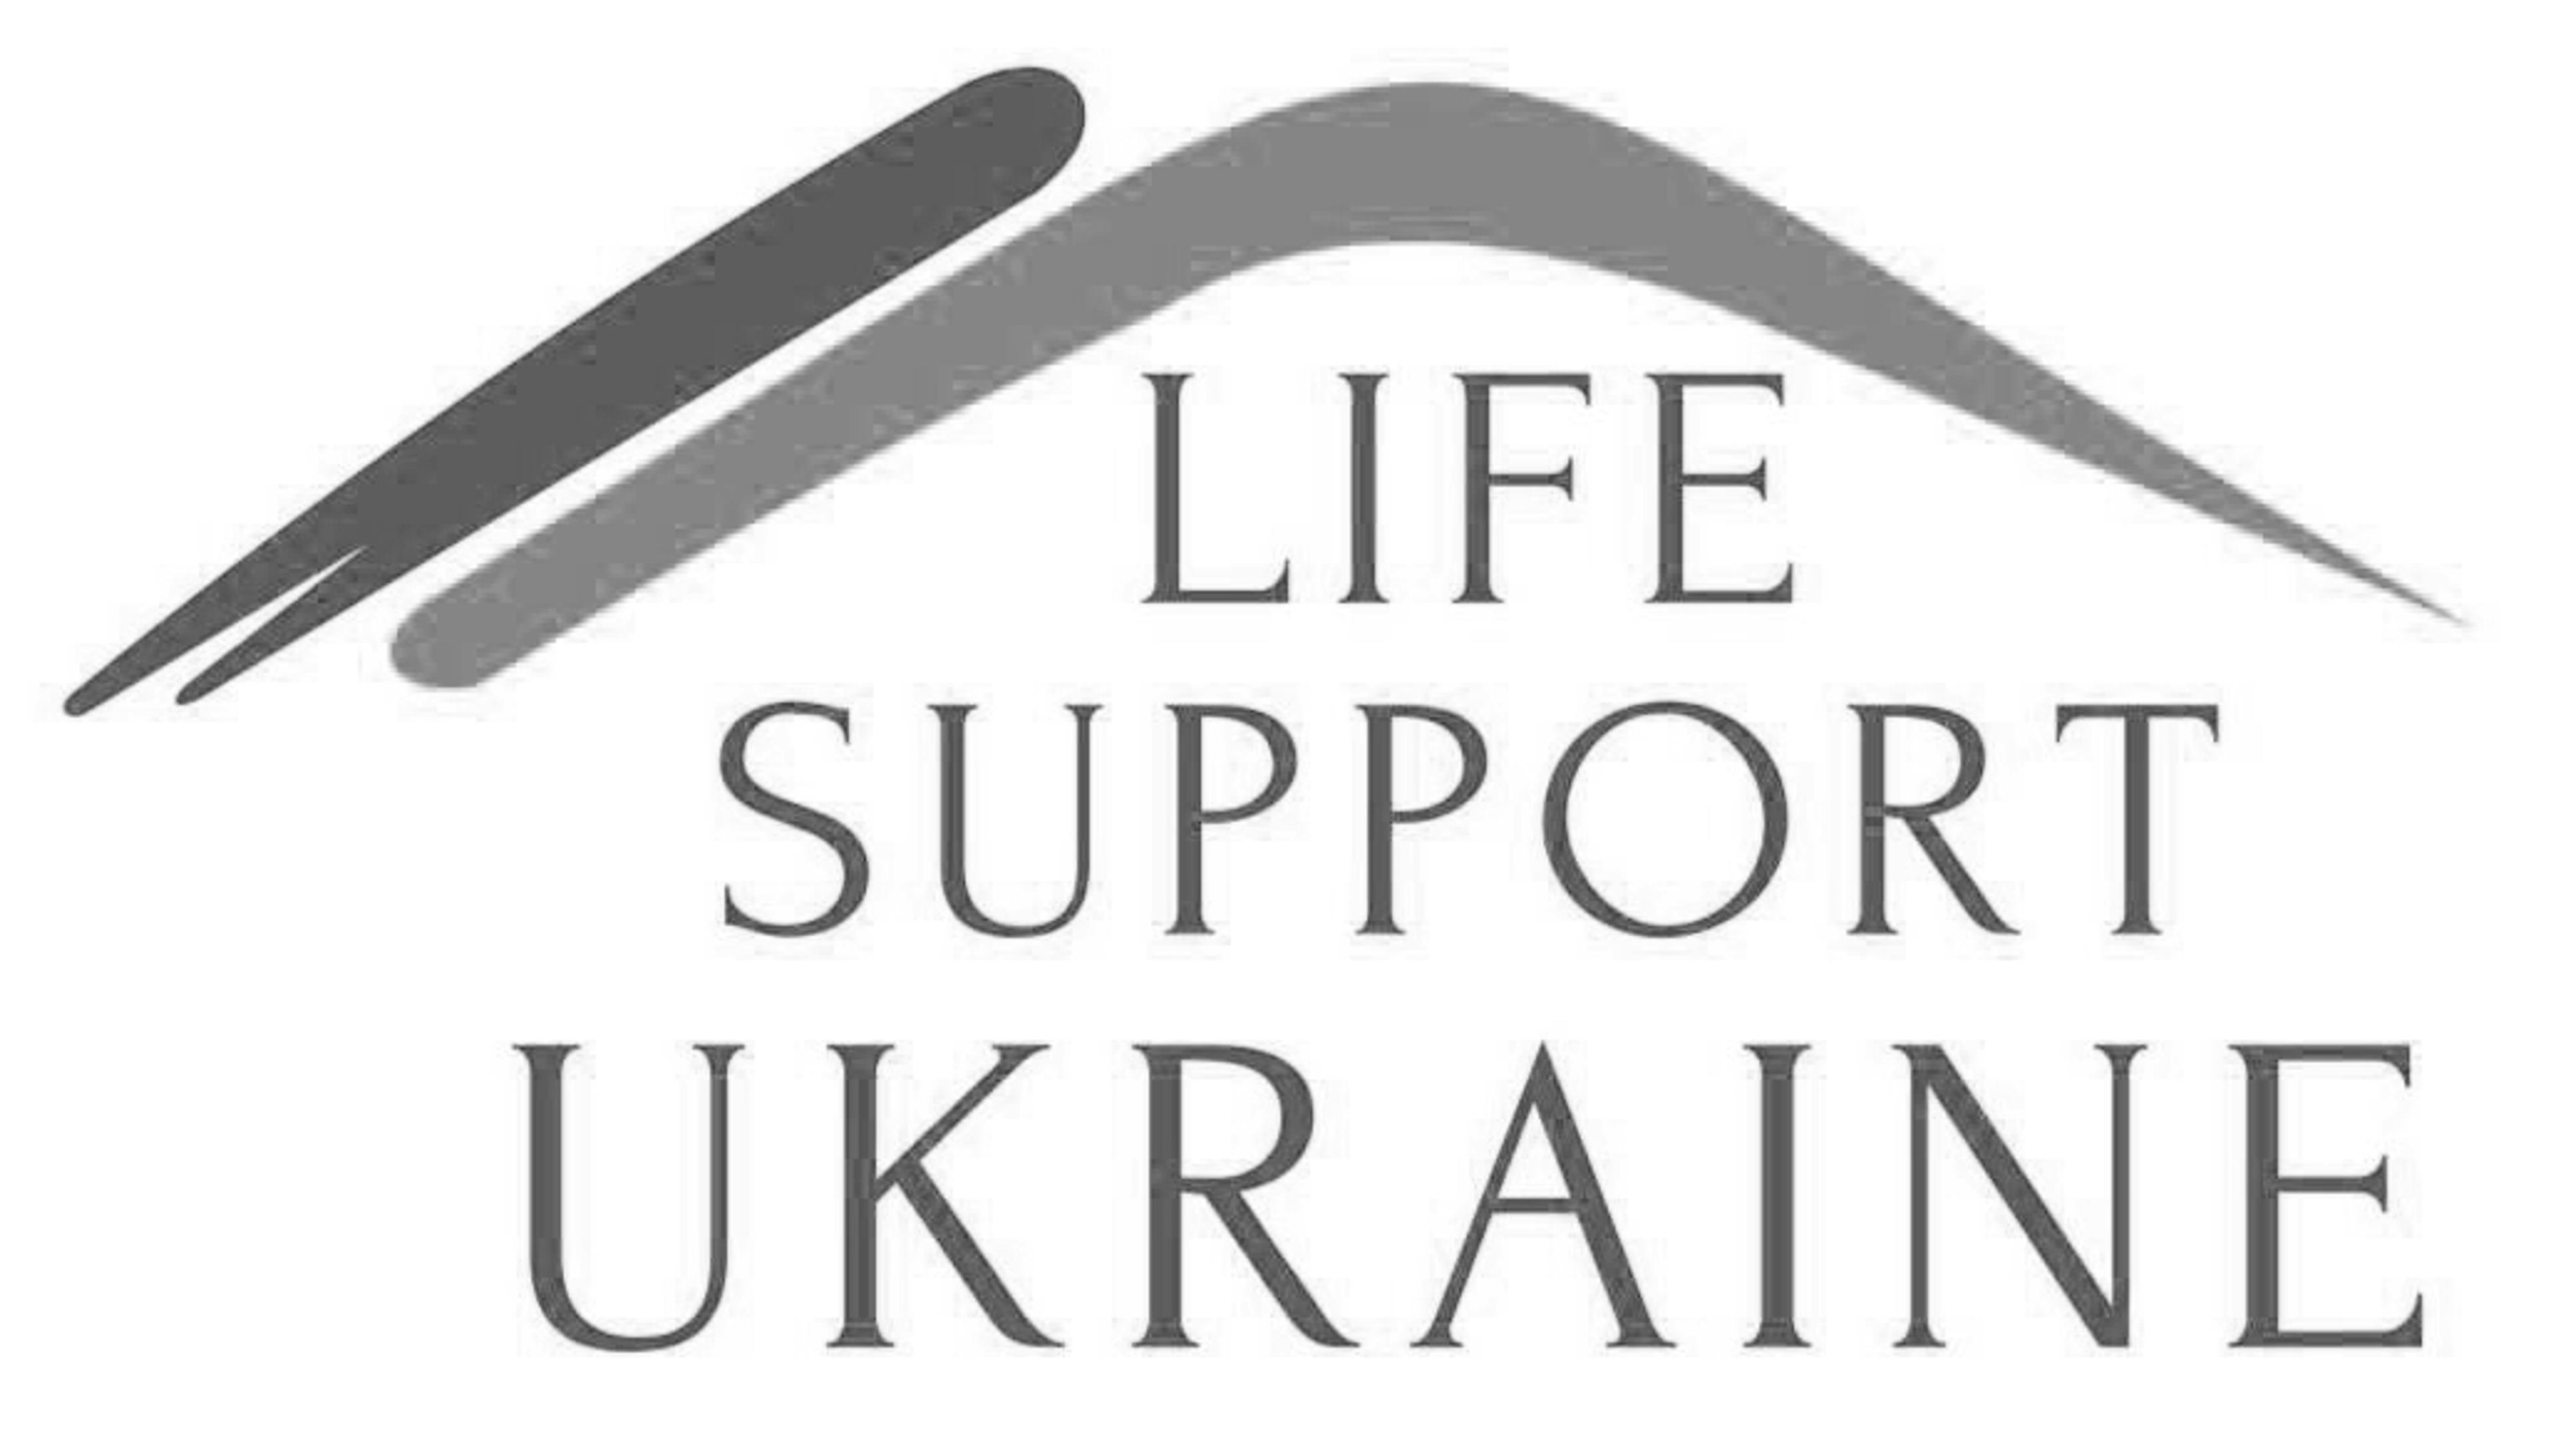 Life Support Ukraine